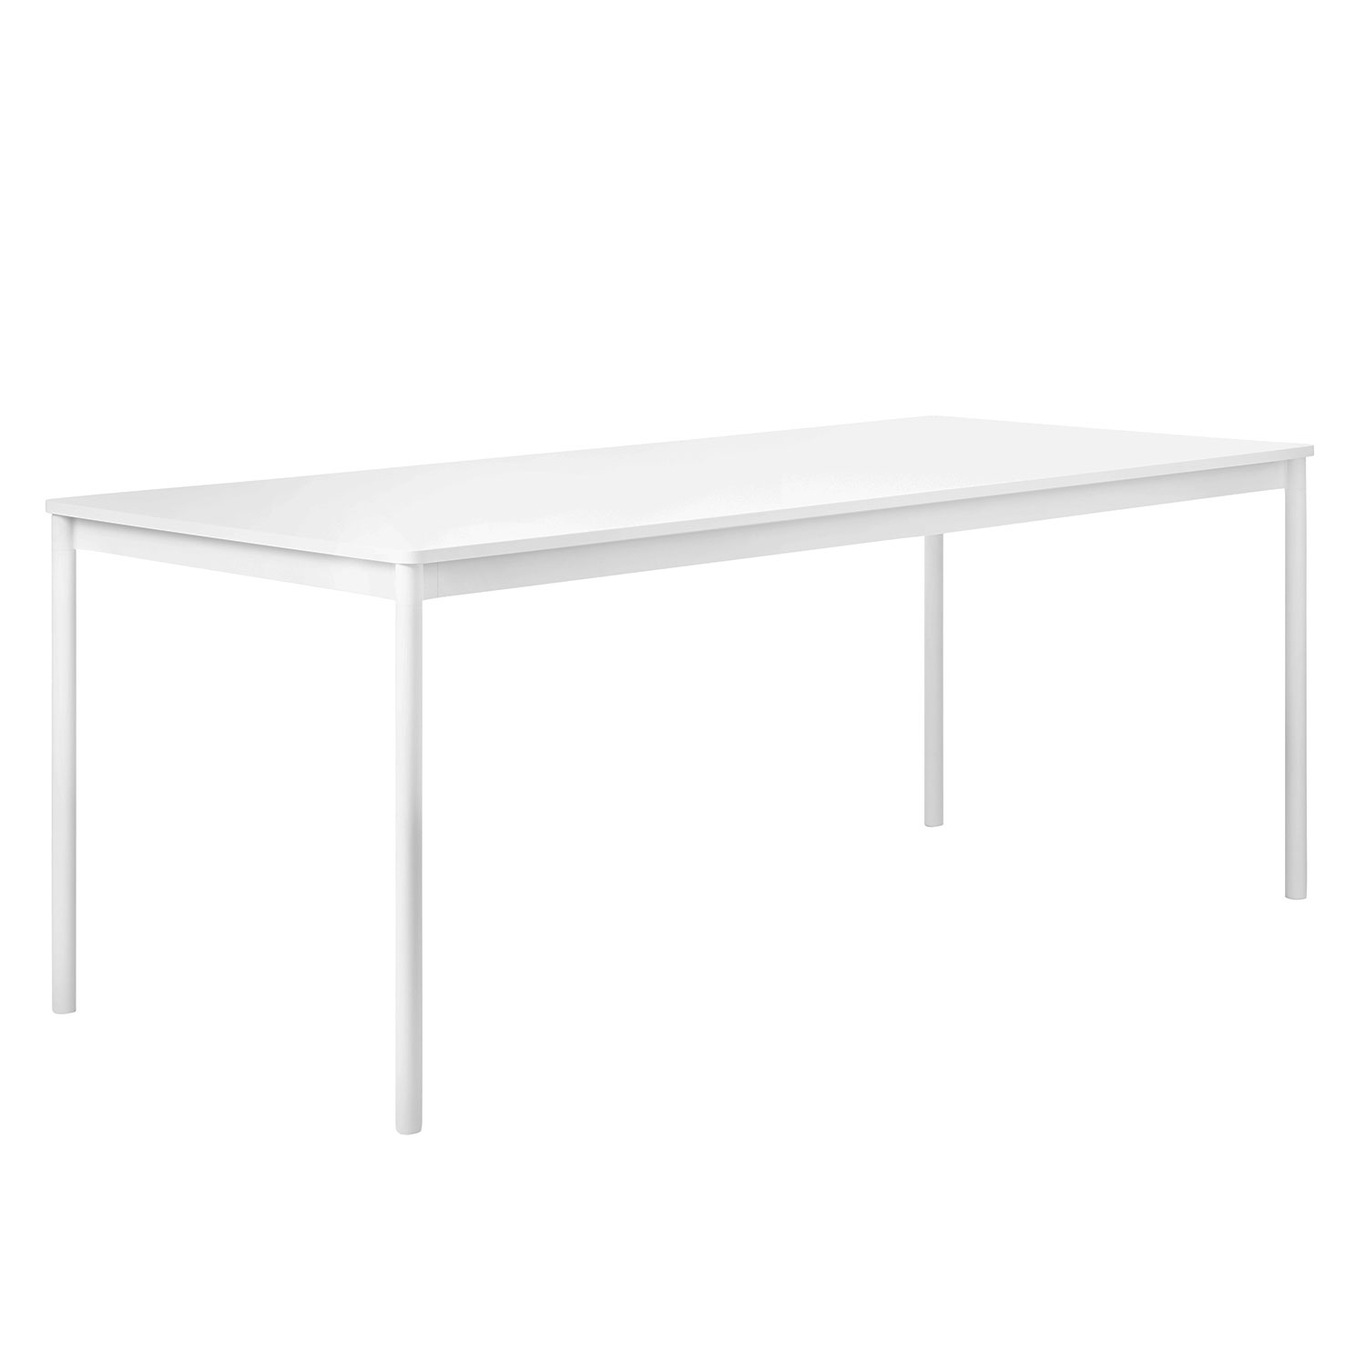 Base Table Matbord 190x85 cm, Vit